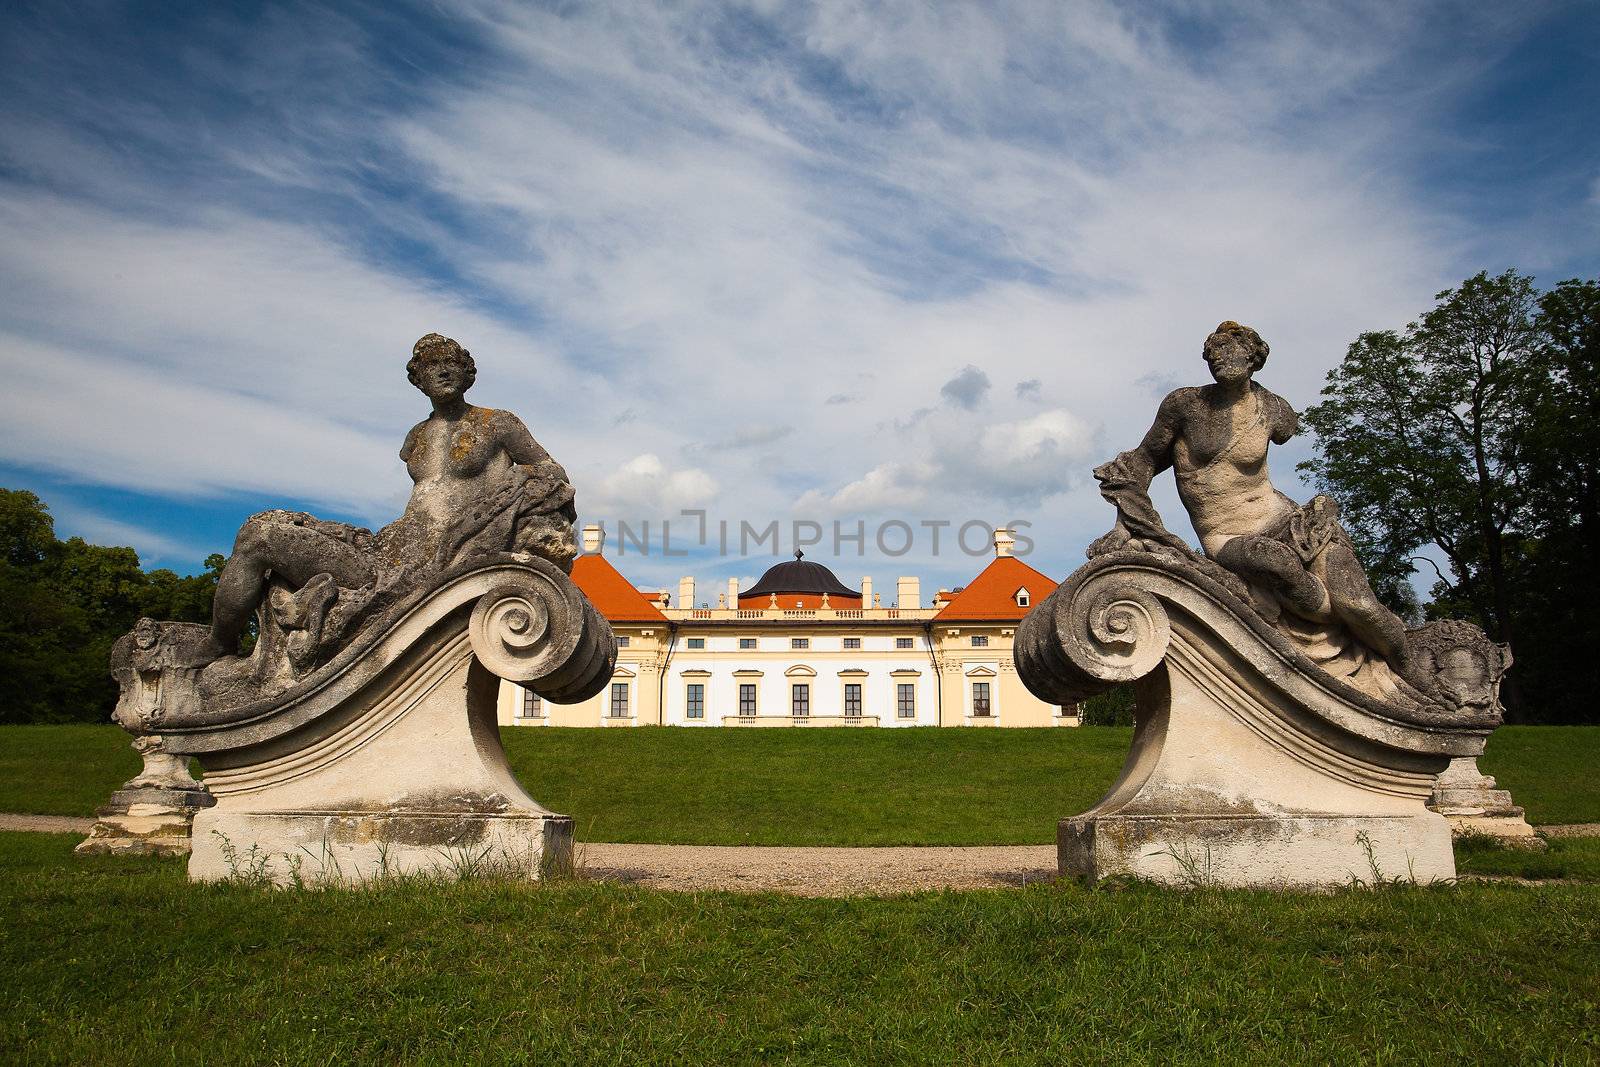 Castle in Slavkov - Austerlitz near Brno, Czech Republic